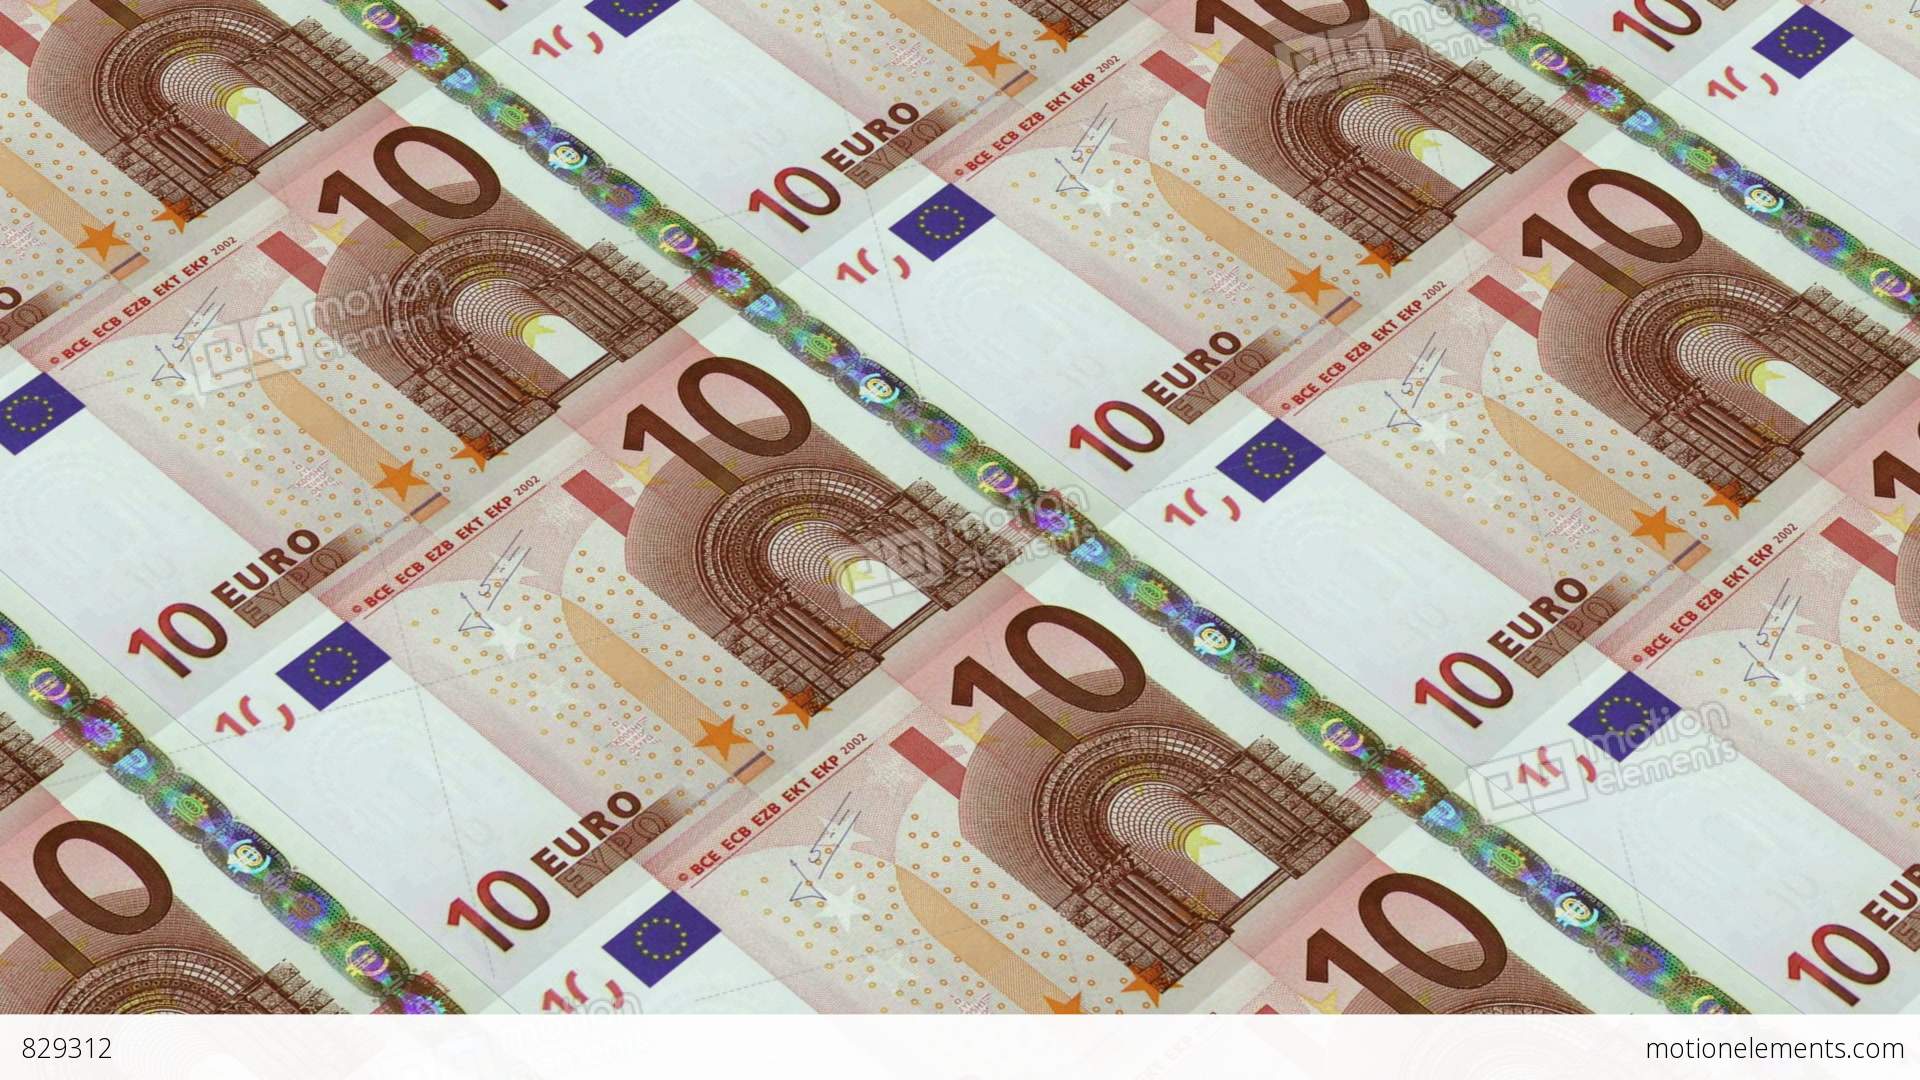 10 Euro Bills,Printing Money Animation Stock Animation | 829312